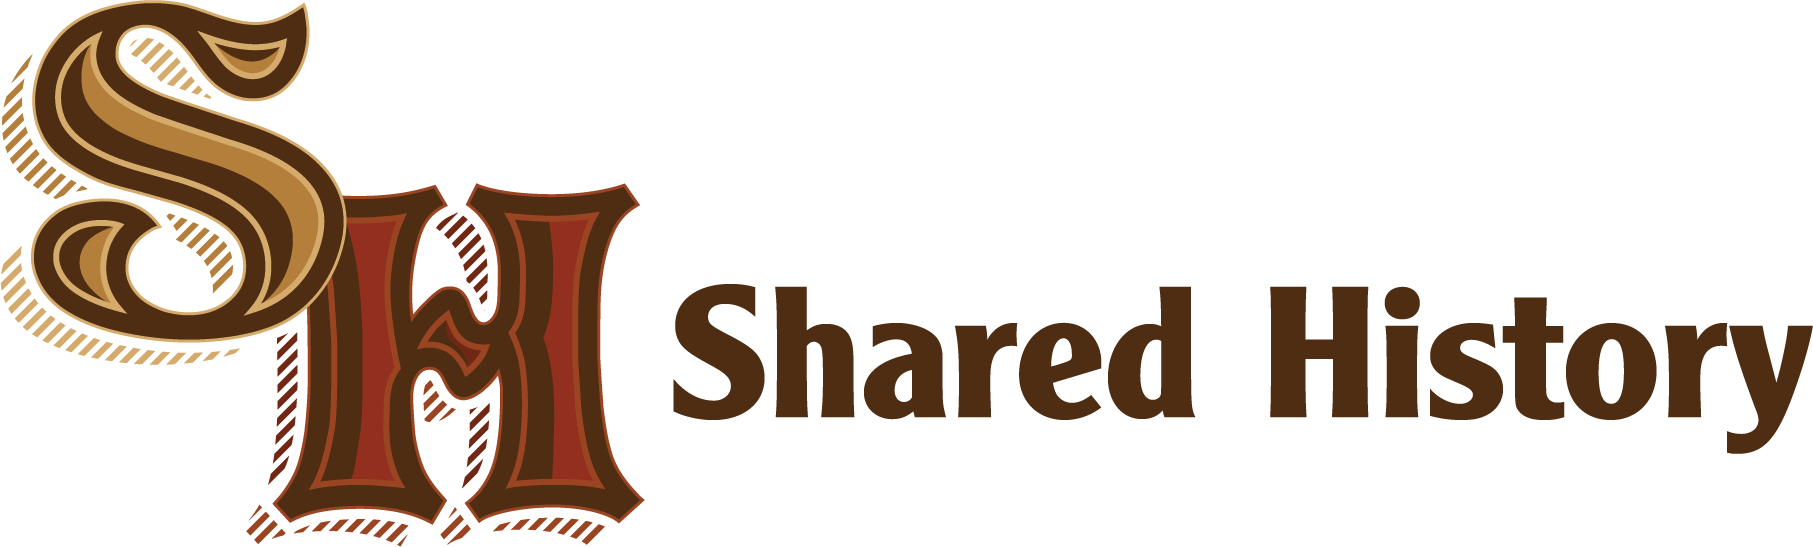 logo-full_SharedHistory.png